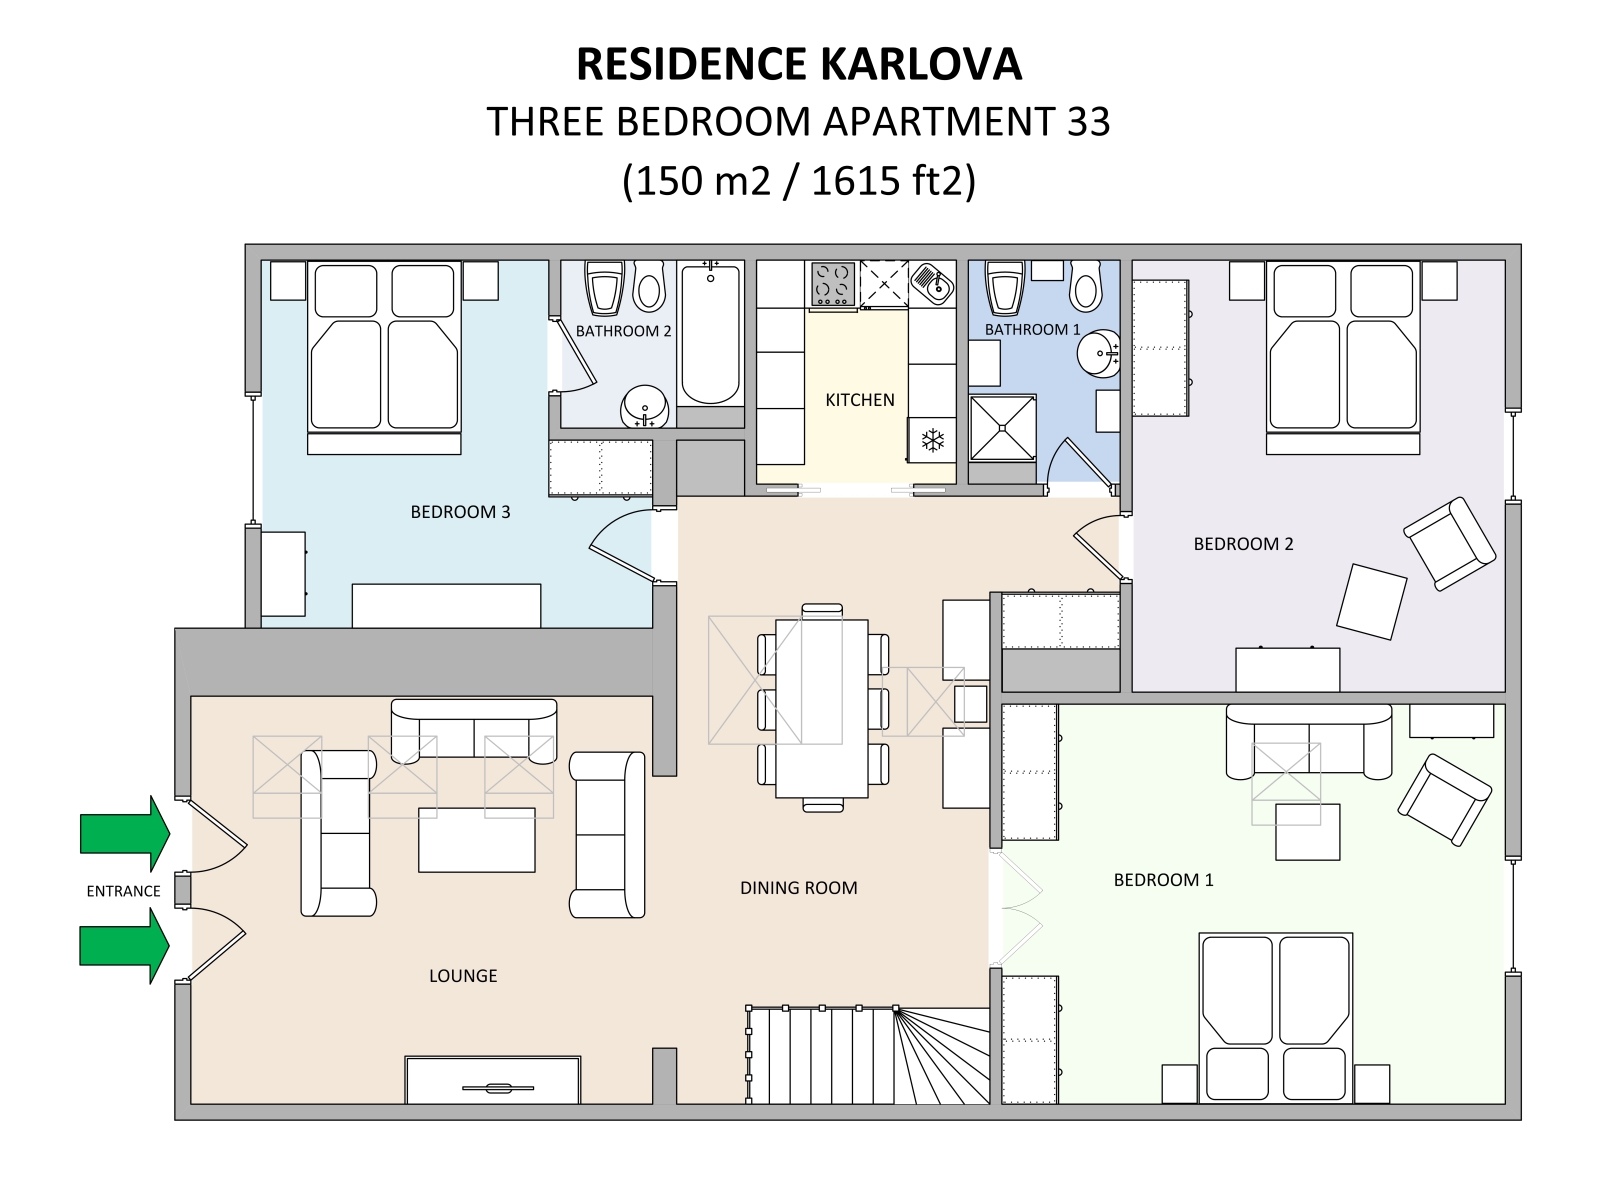 Floorplan of apartment 33 in Residence Karlova in Prague